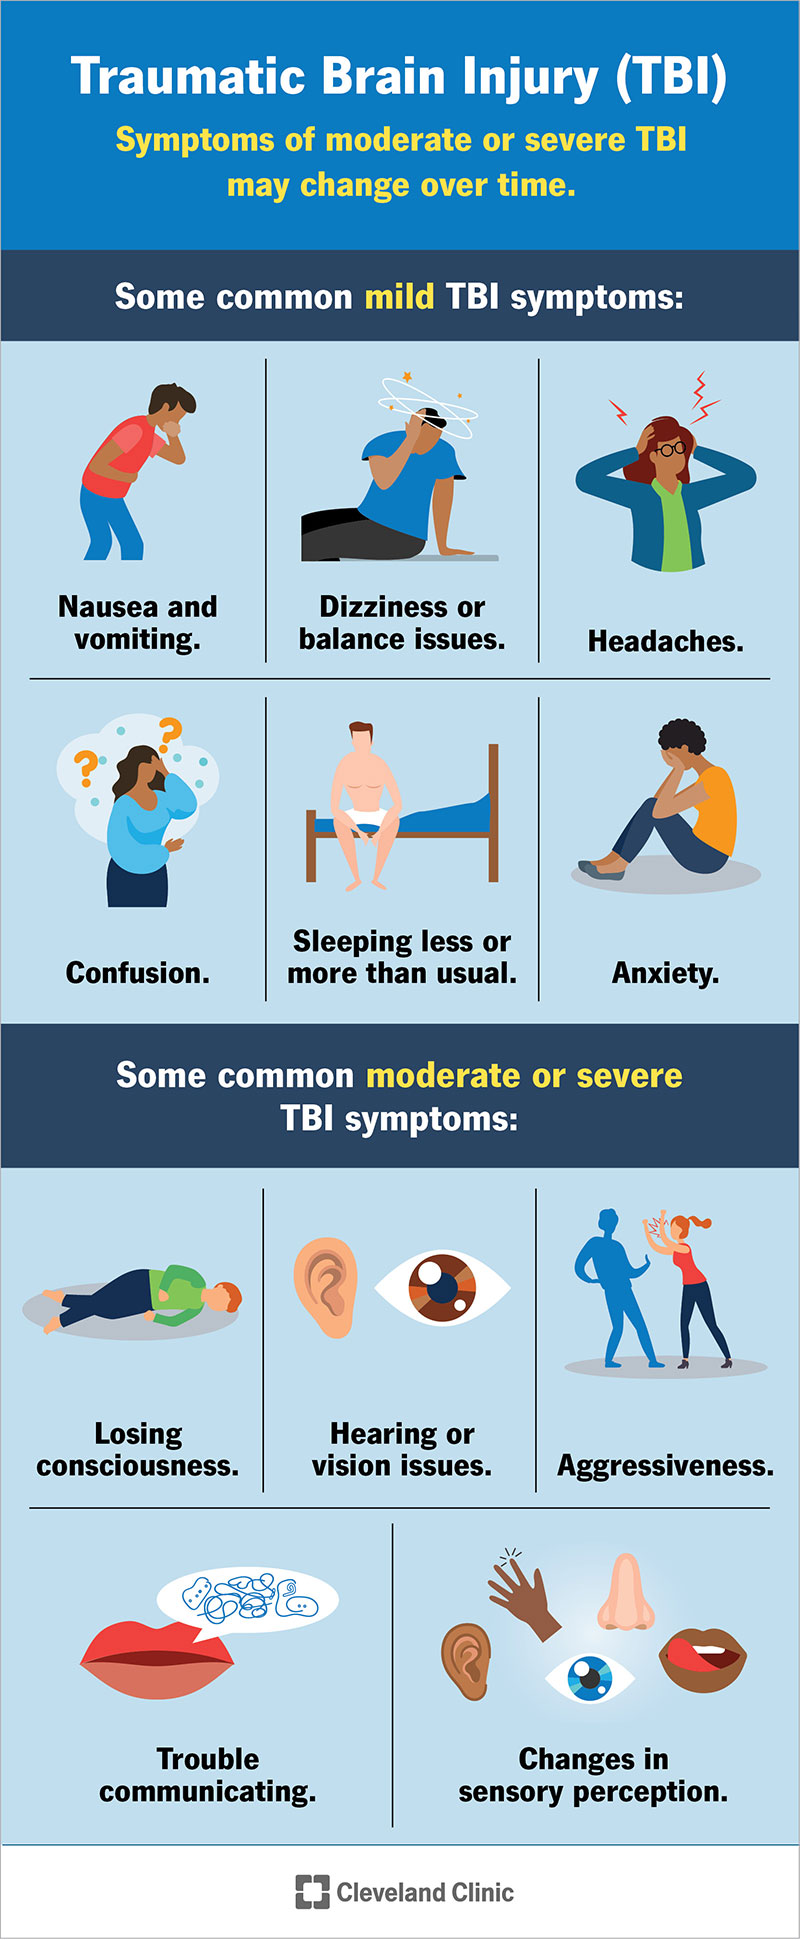 Symptoms of mild, moderate and severe traumatic brain injury (TBI)